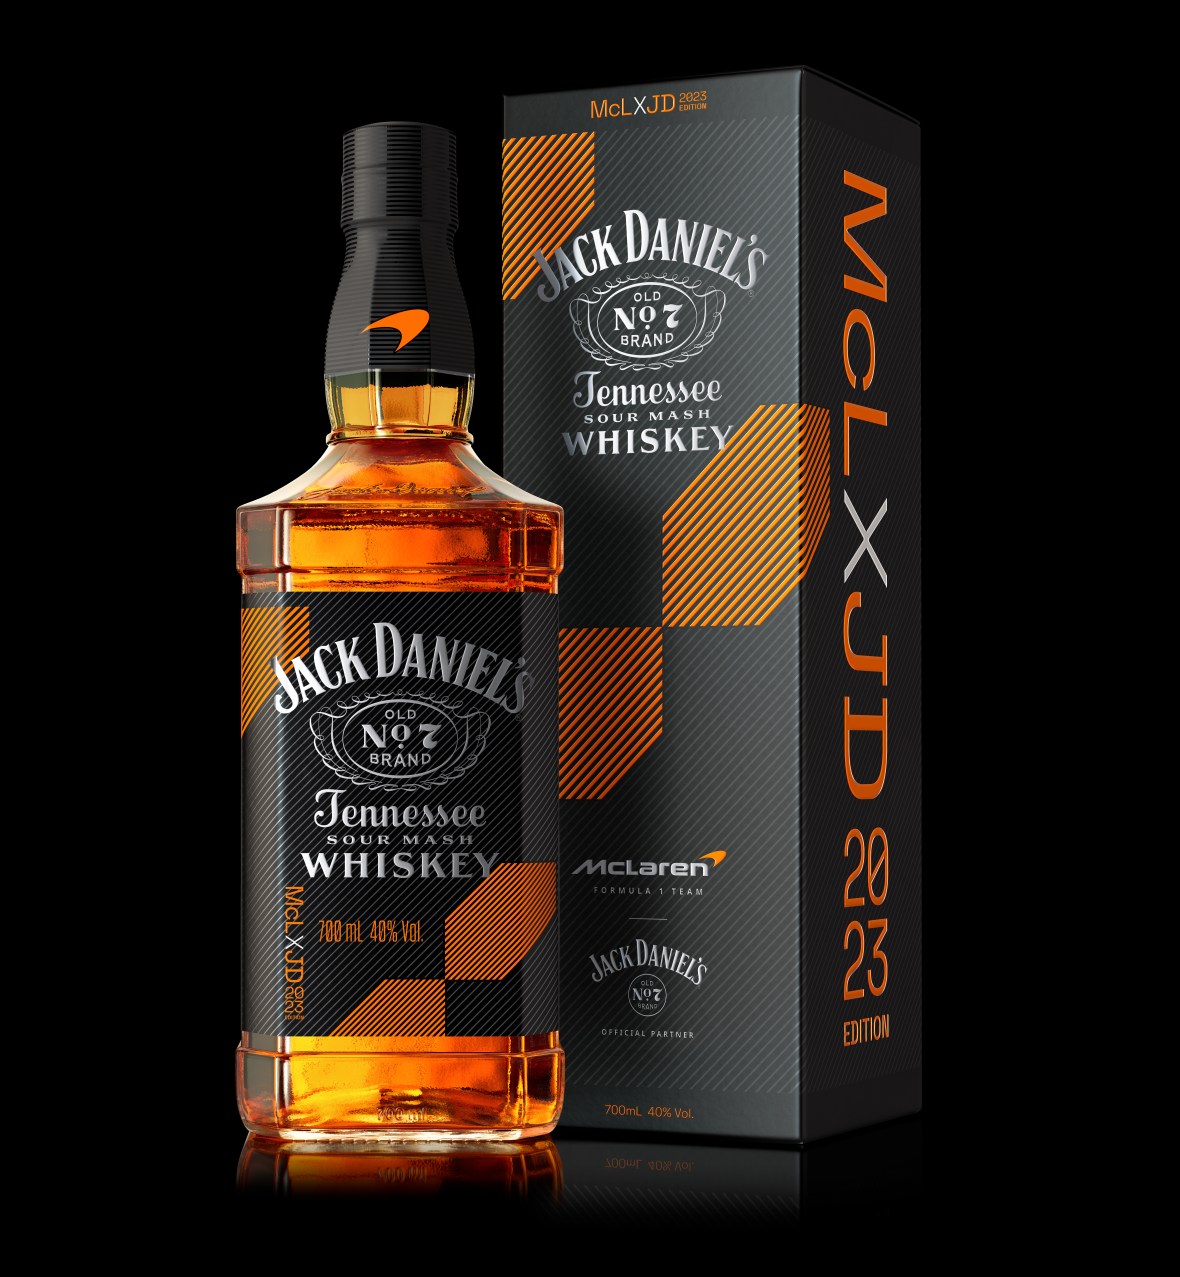 Aw 700Ml Jd Lto Mclaren Gift Carton Se Black Jack Daniel'S Revs Up Limited-Edition Whiskey Collab With Mclaren Racing